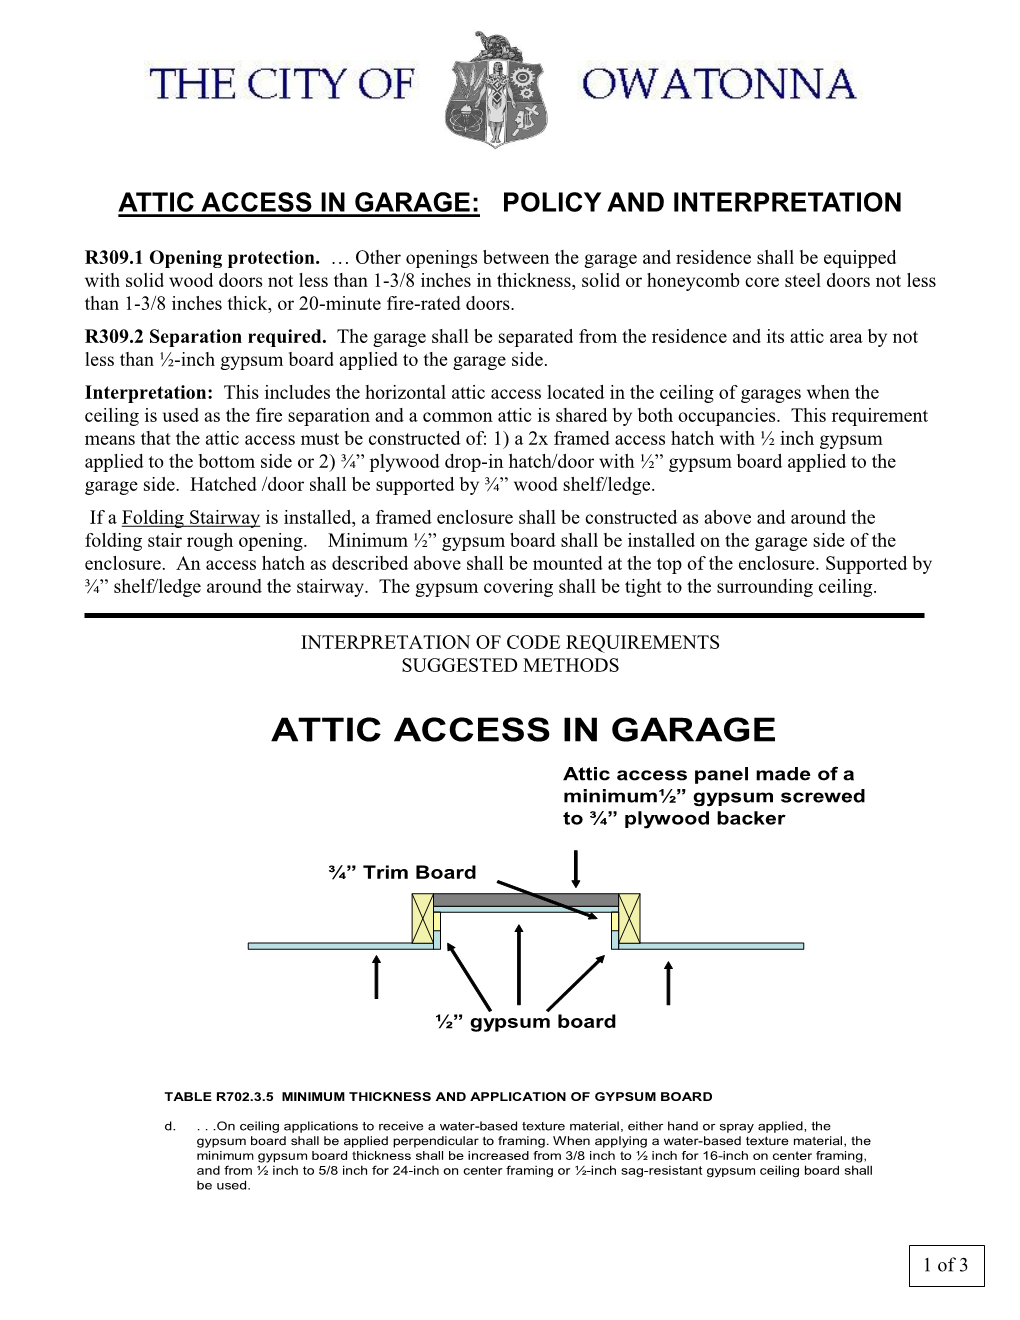 Attic Access in Garage: Policy and Interpretation